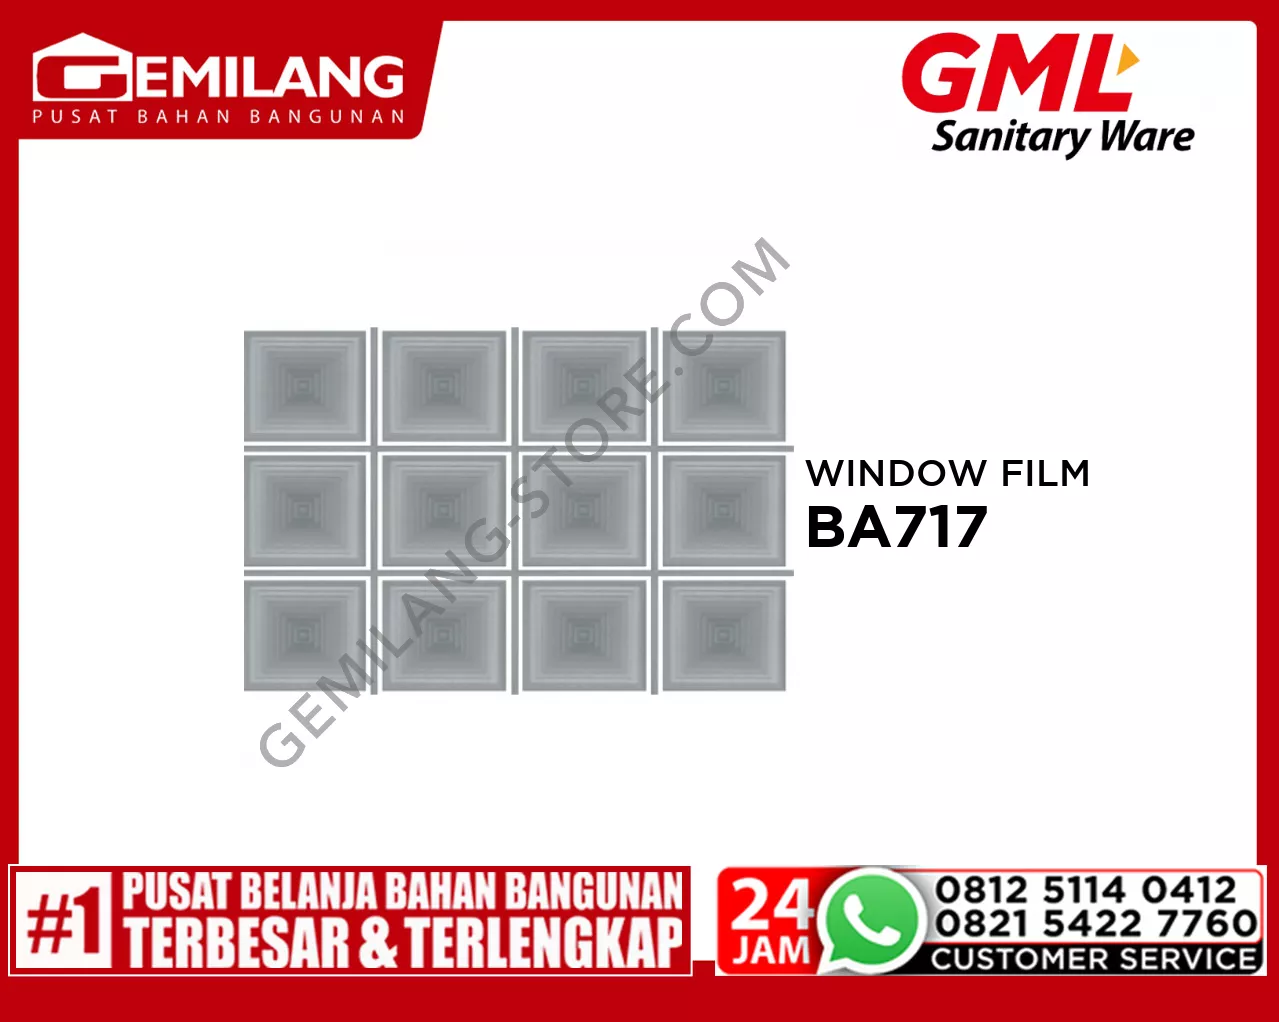 GML 2D STATIC WINDOW FILM BA717 50 x 90cm x 0.18mm